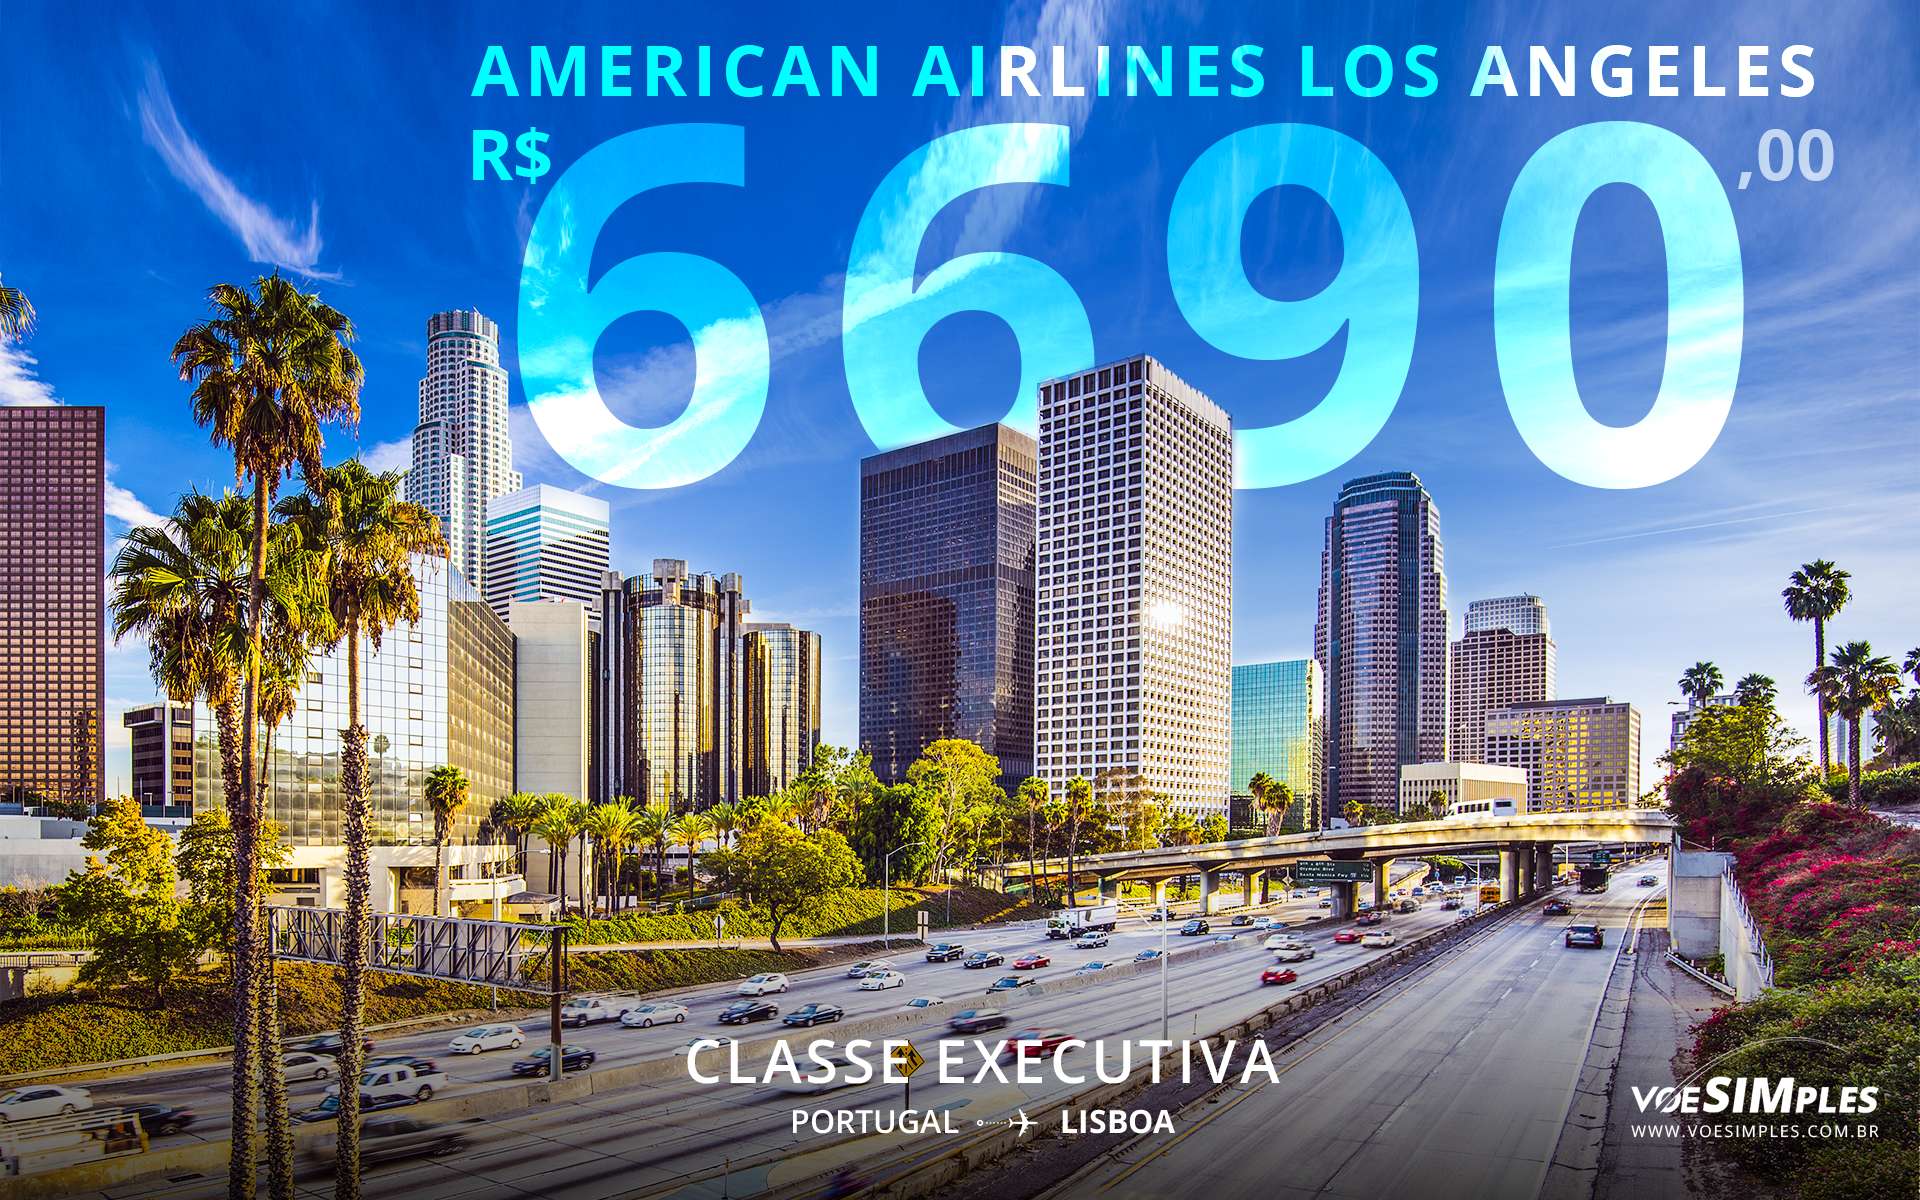 Passagem Executiva American Airlines SP Los Angeles Voe Simples